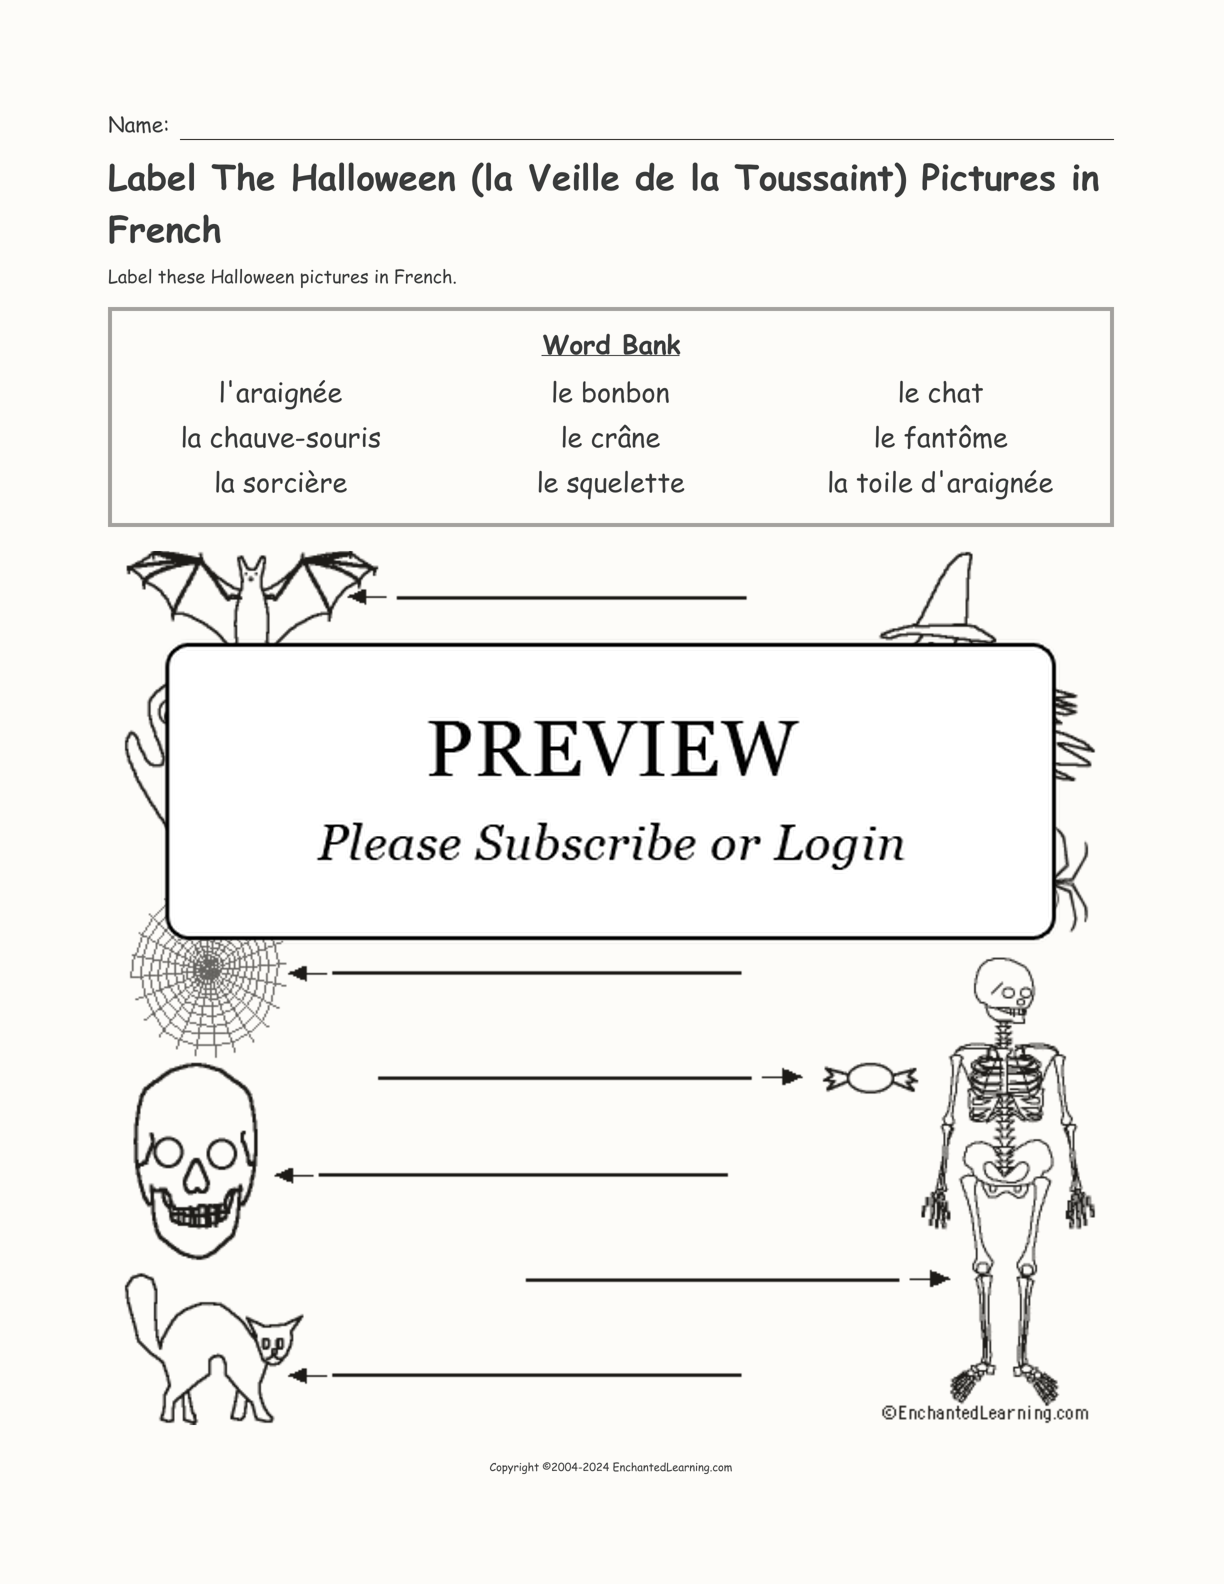 Label The Halloween (la Veille de la Toussaint) Pictures in French interactive worksheet page 1